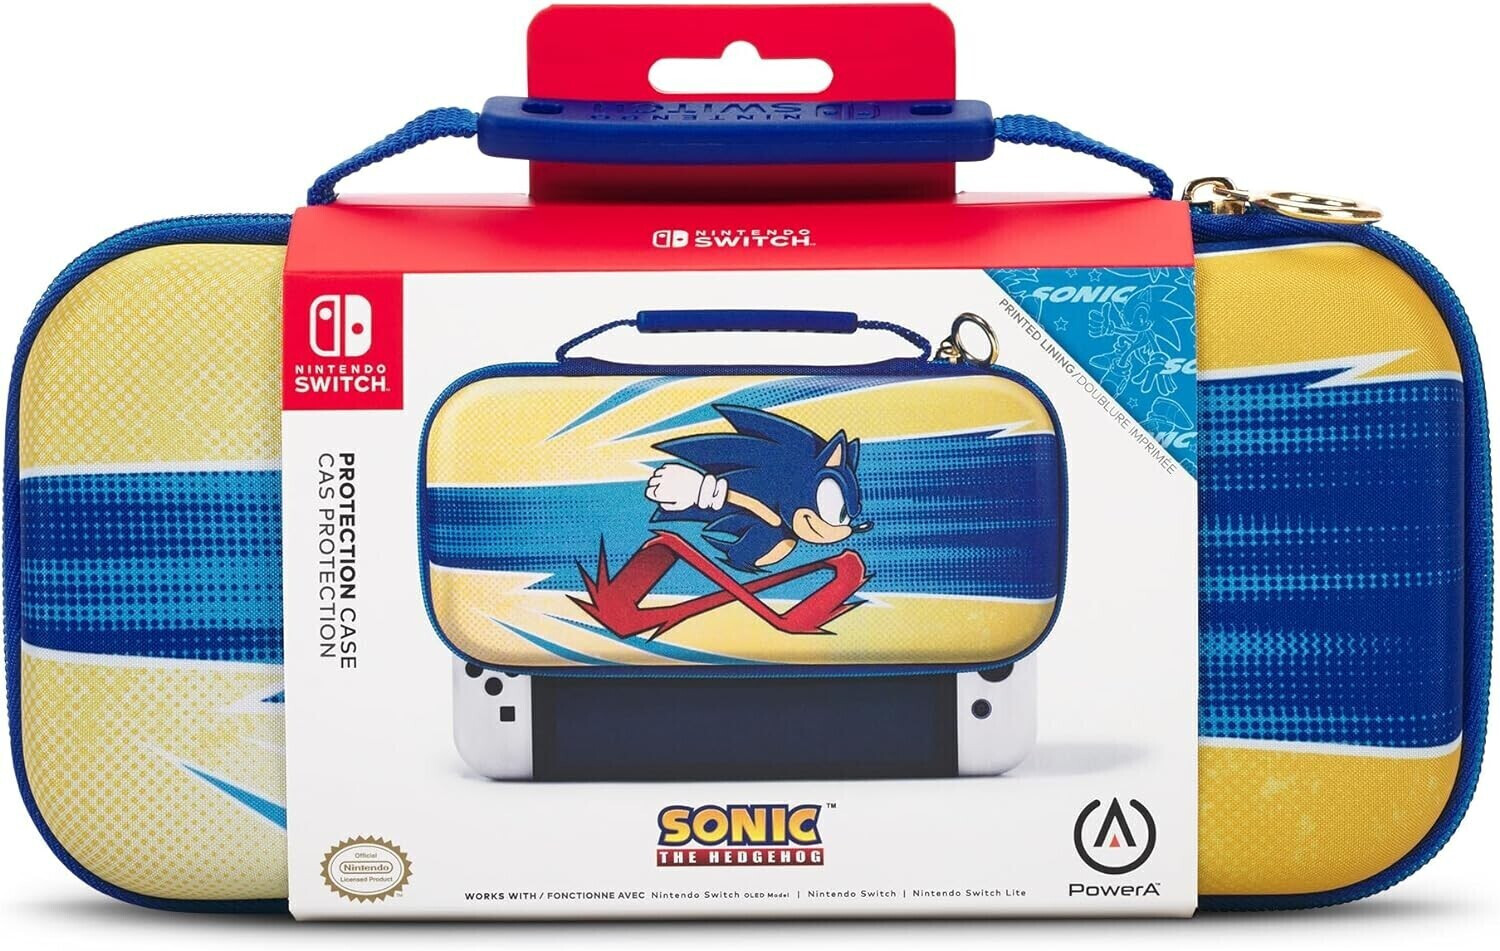 Consola Switch Oled Azul/Roja + Sonic M. + Funda+Protector